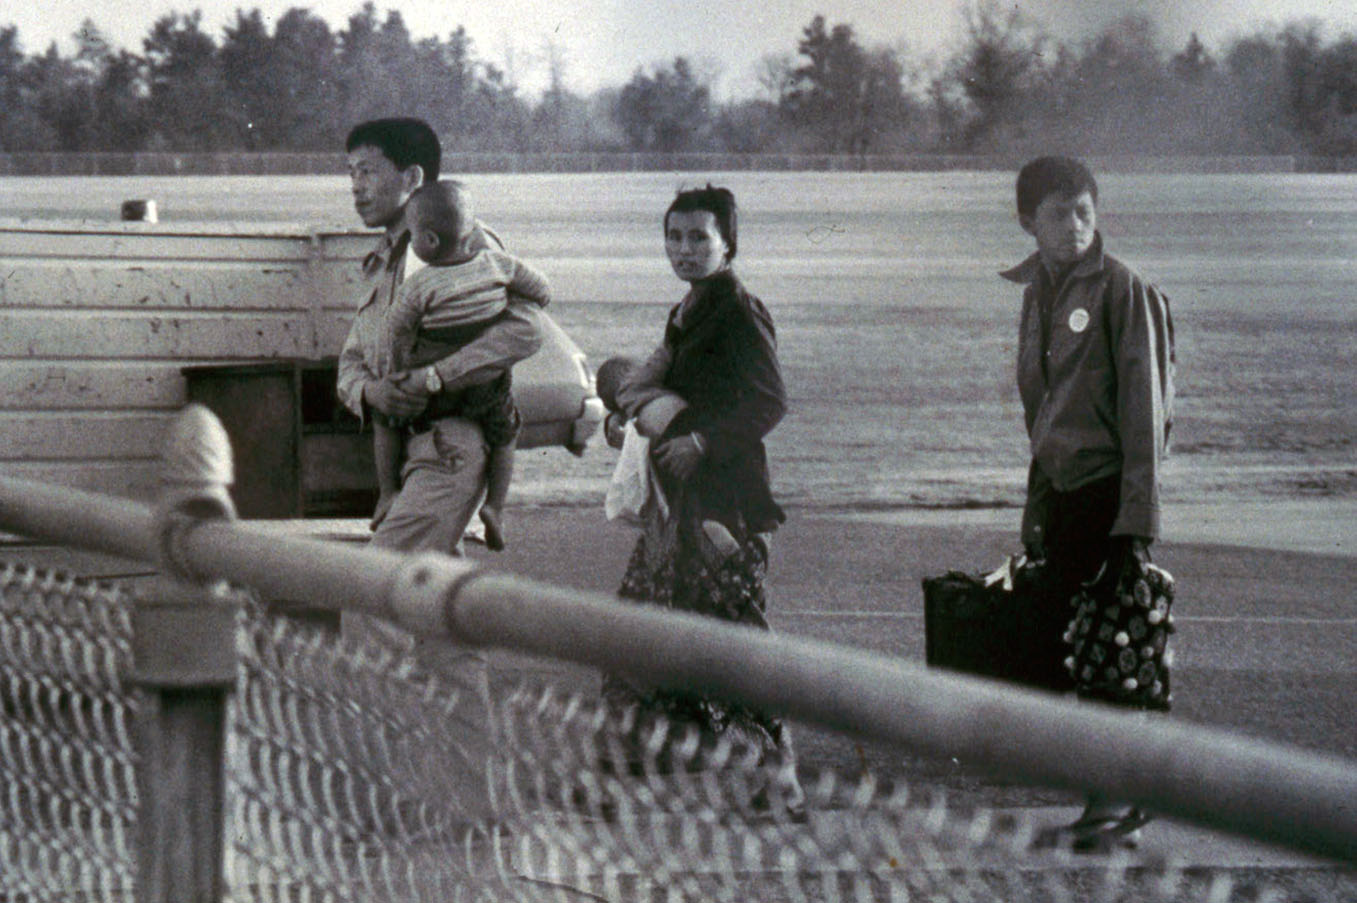 Arriving in Eau Claire on April 9, 1976